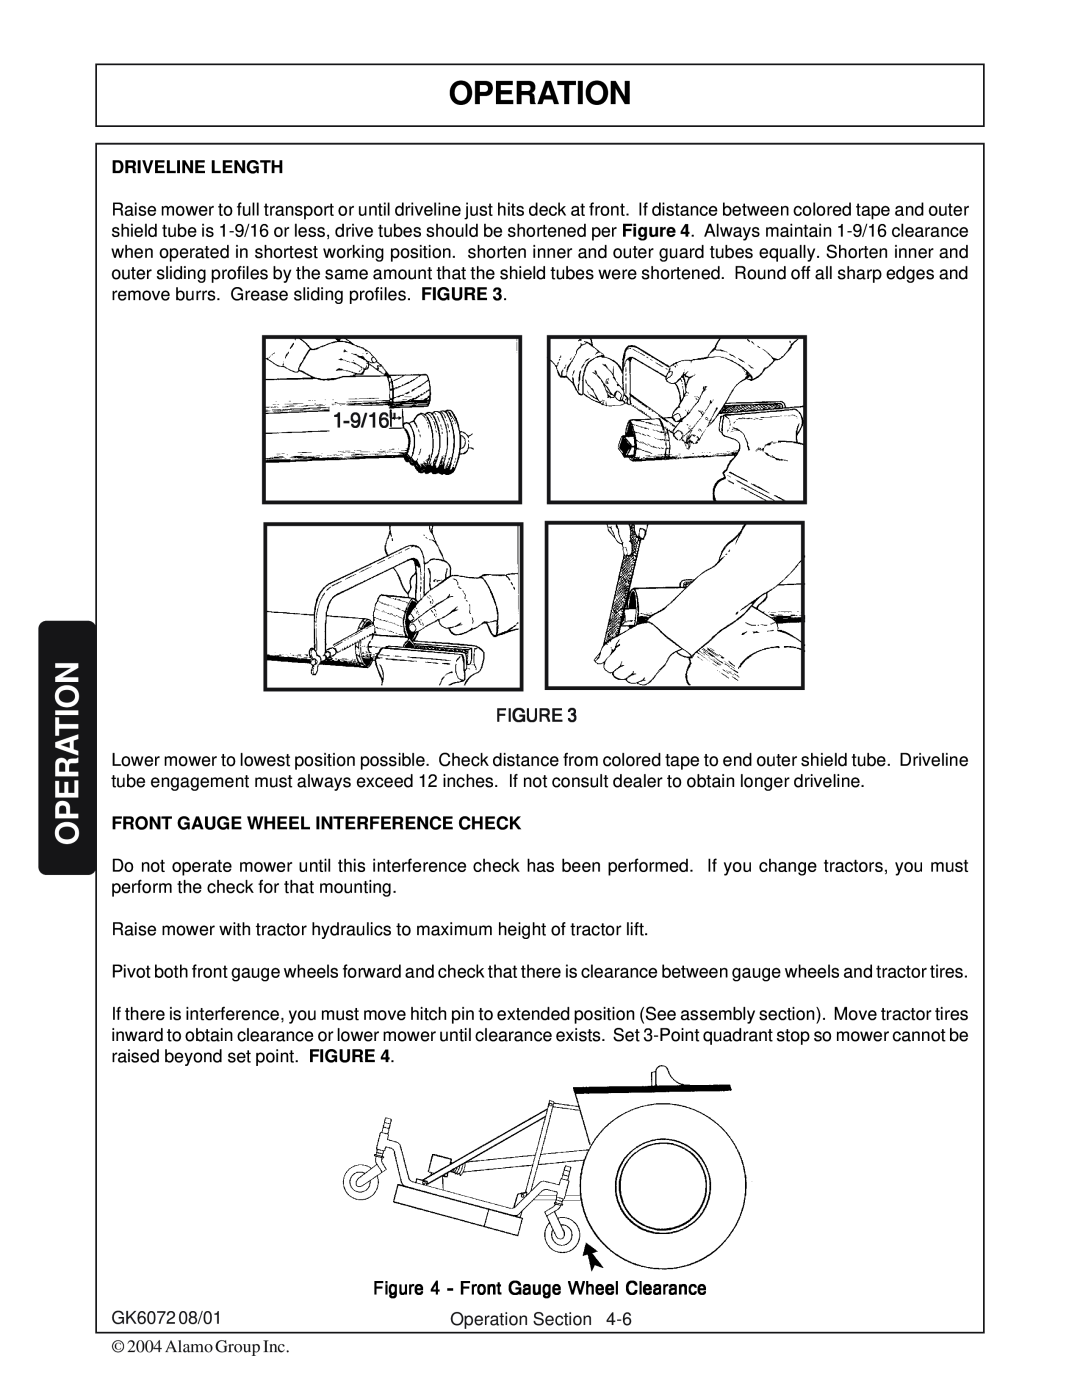 Rhino Mounts GK6072 manual Operation, 1-9/16, Driveline Length, Figure, Front Gauge Wheel Interference Check 